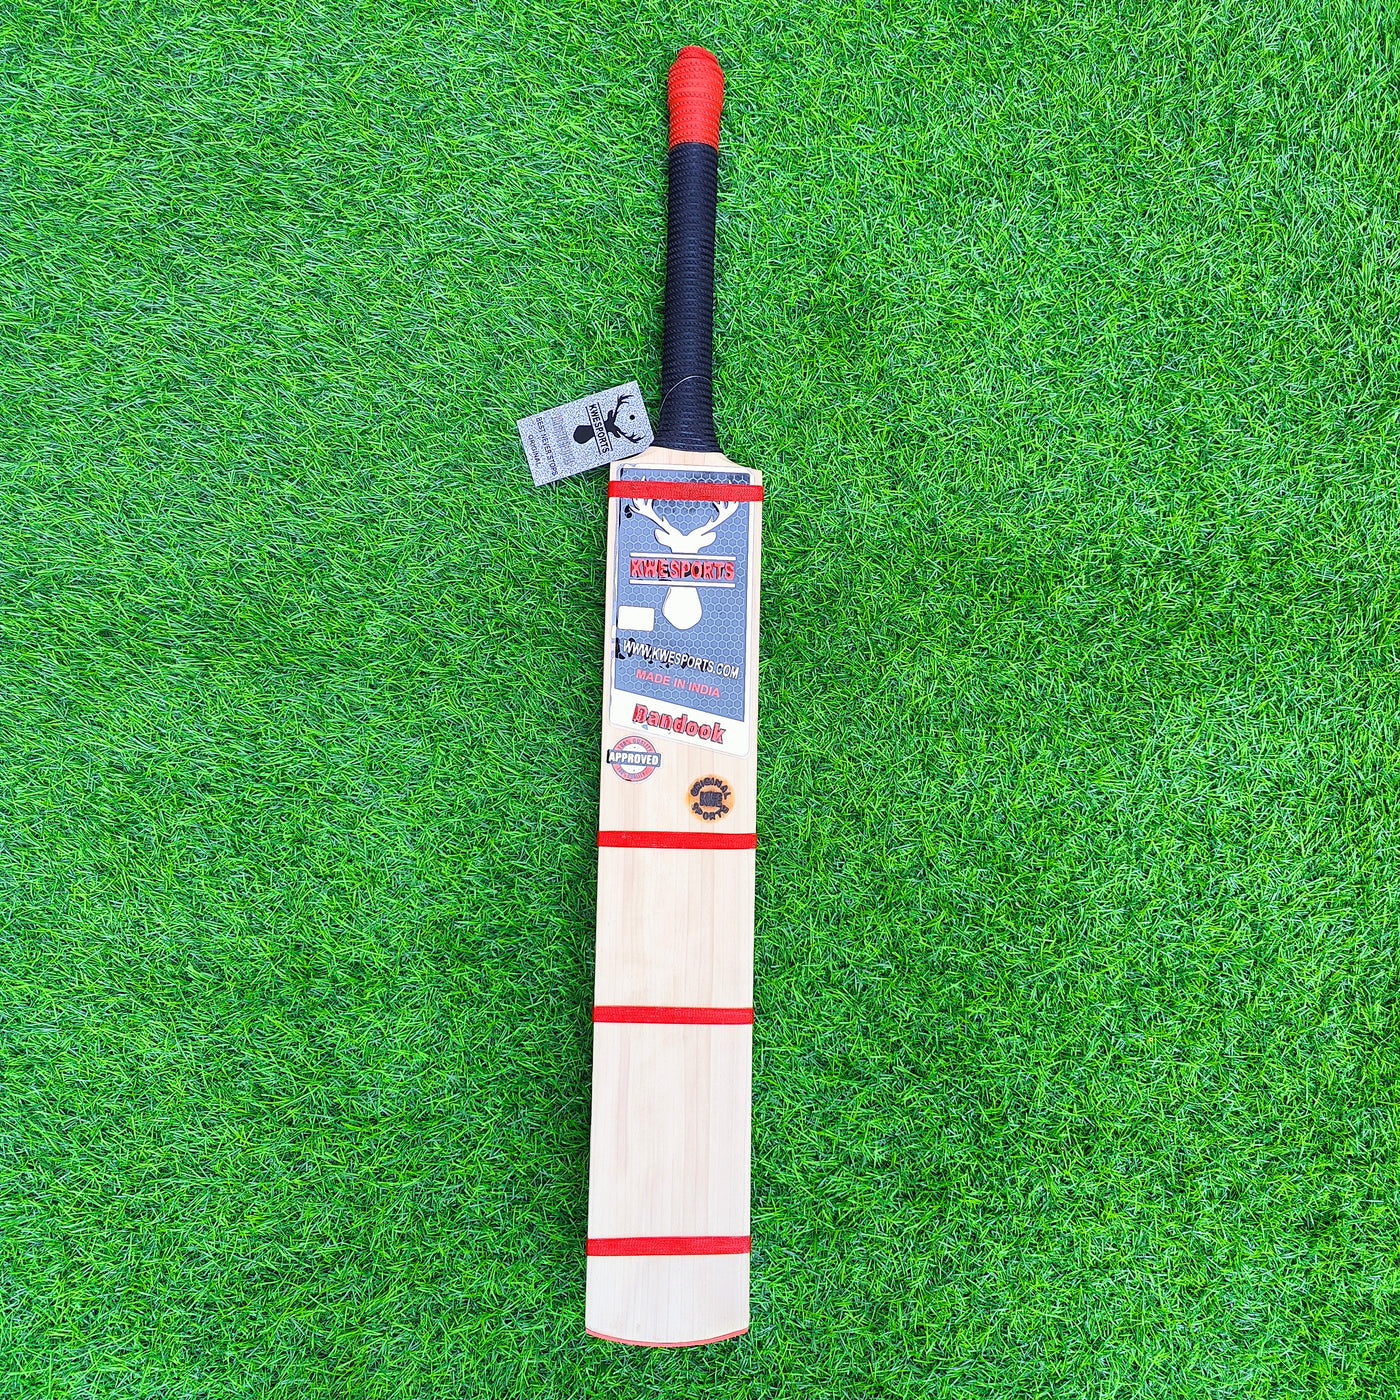 Kwesports Bandook bat 4 Scoop Cut Kashmir Willow Hard Tennis Bat